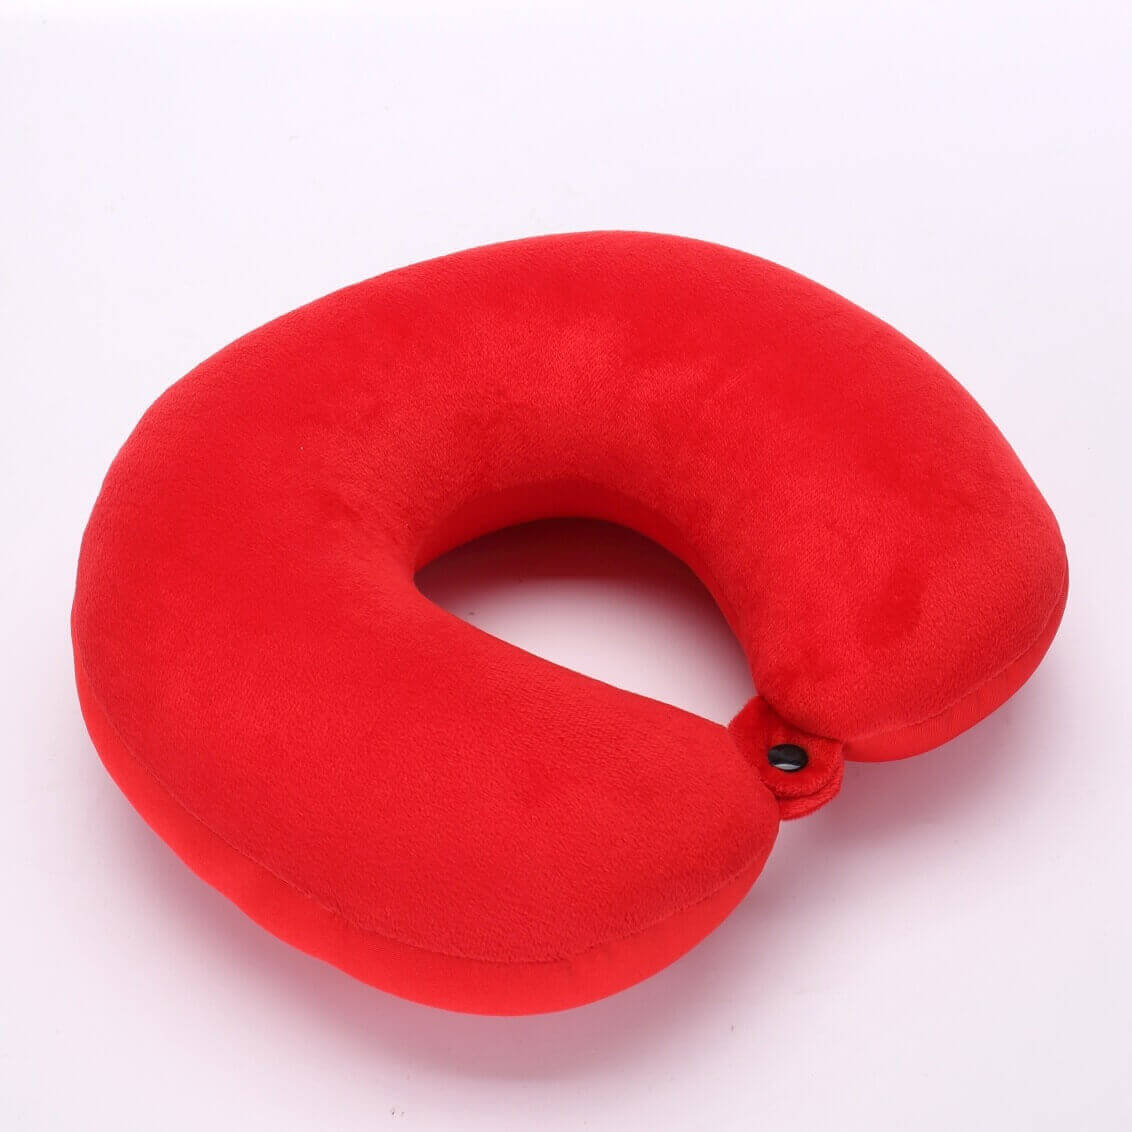 Fanwer memory foam travel pillow, red